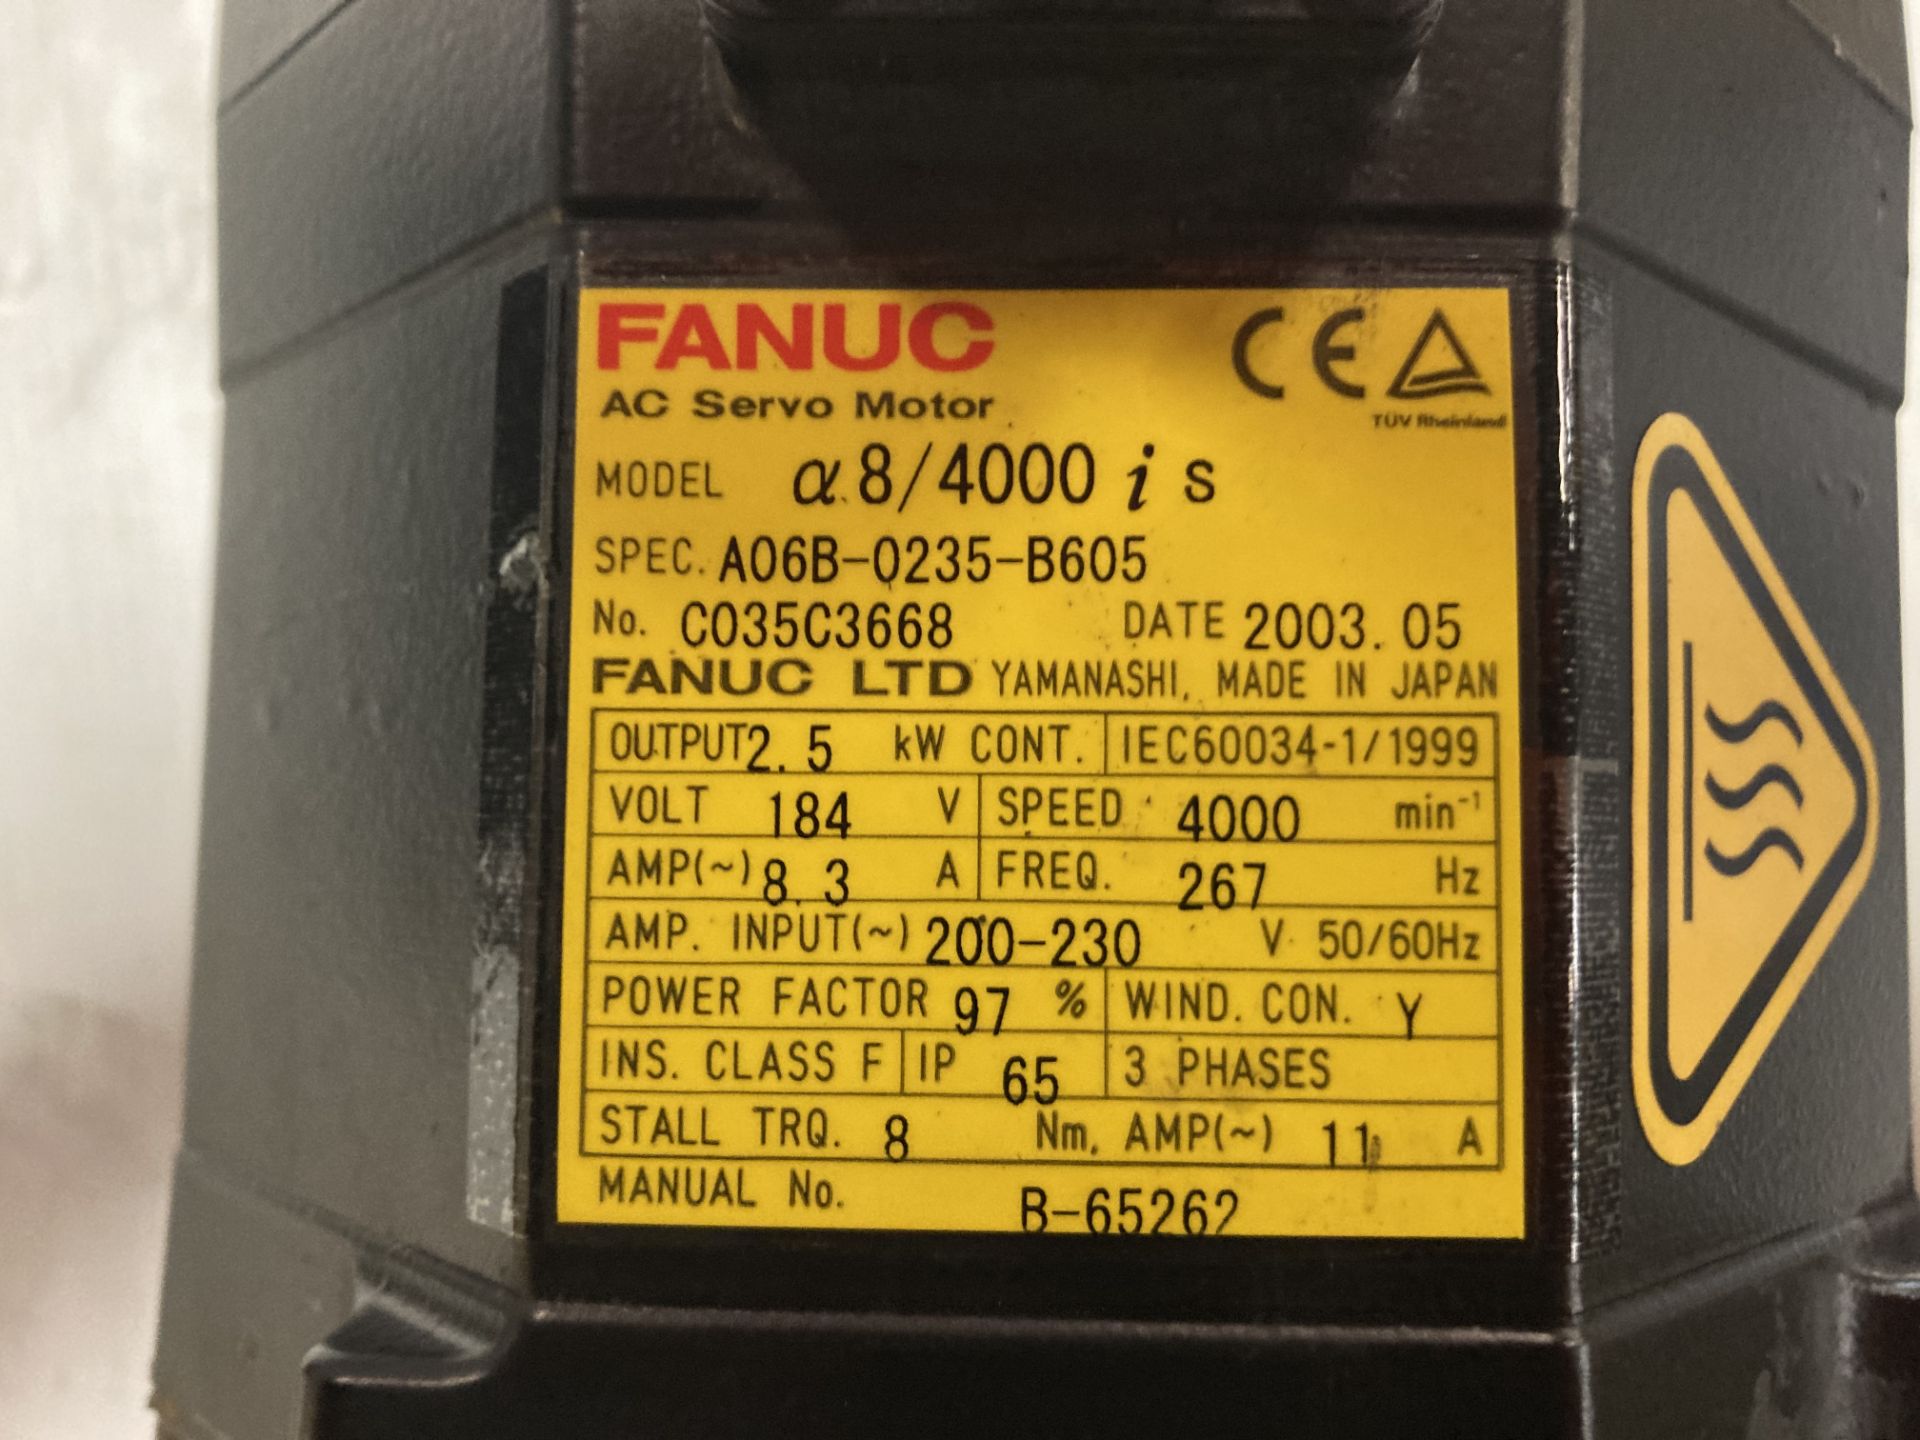 (2) Fanuc AC Servo Motor, M/N: a8/4000is - Image 7 of 7